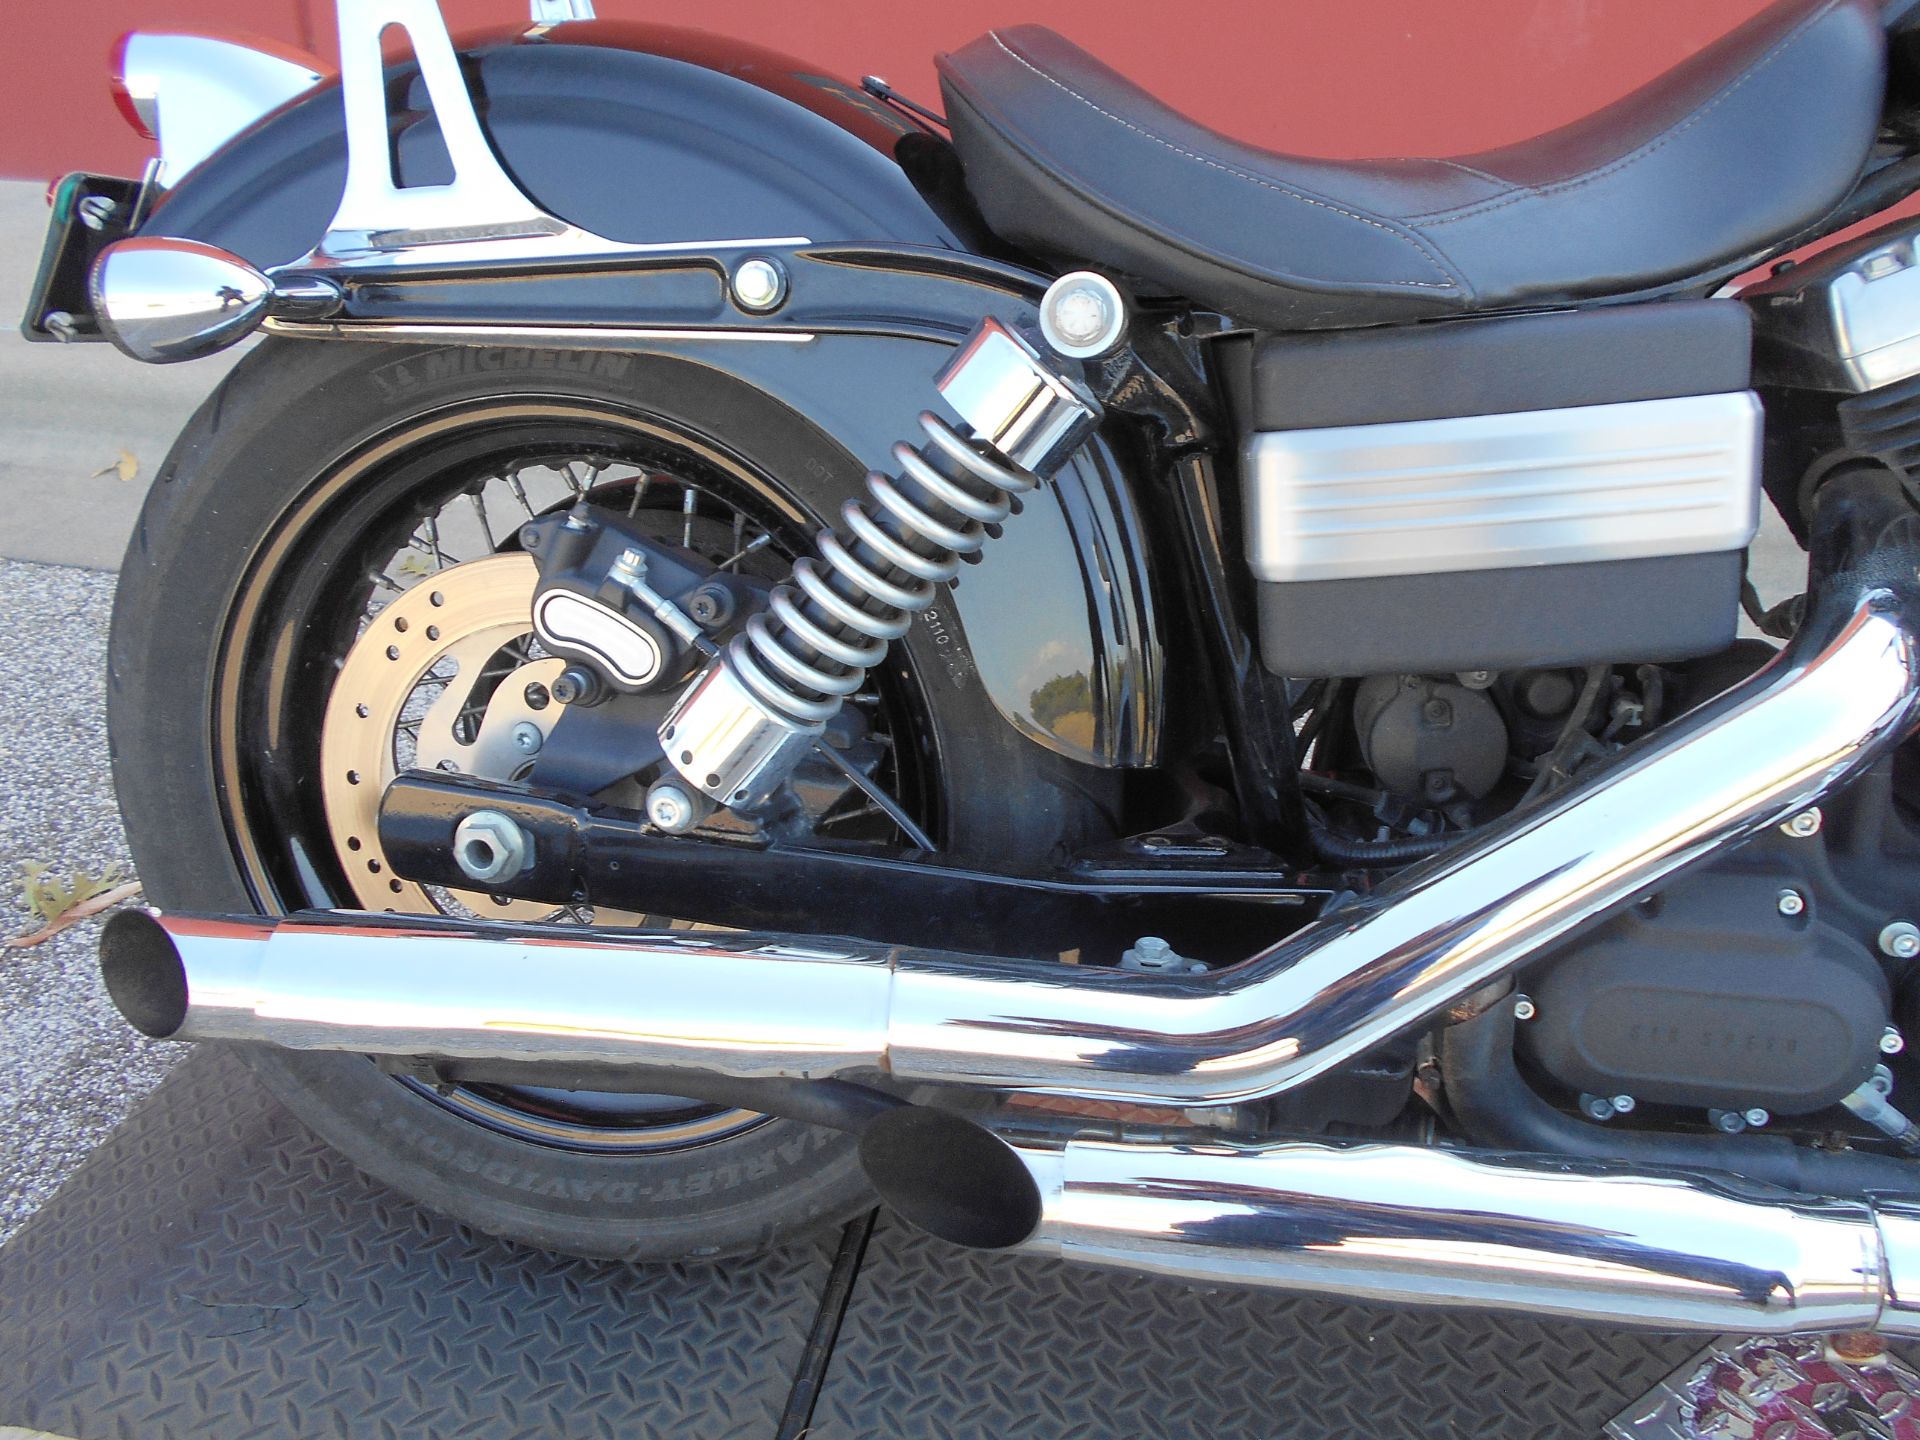 2011 Harley-Davidson Dyna® Street Bob® in Temple, Texas - Photo 7